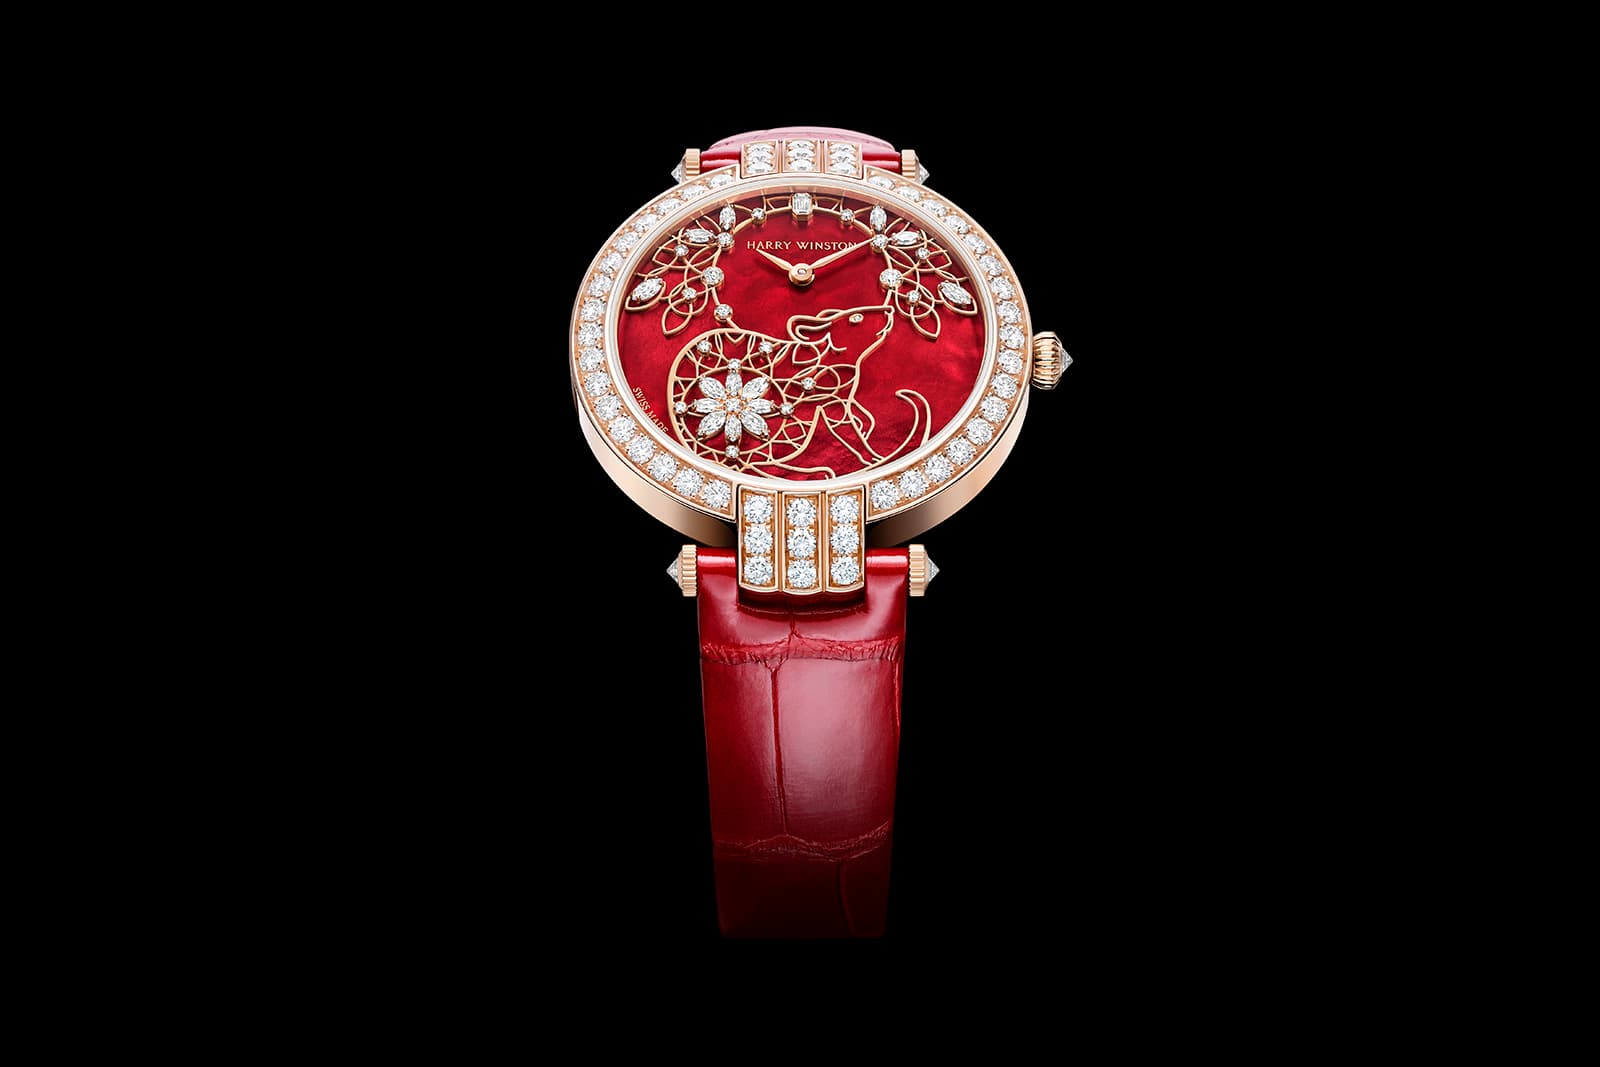 Часы Harry Winston Premier Chinese New Year Automatic 36mm из розового золота с перламутром и 109 бриллиантами общим весом 2.91ct